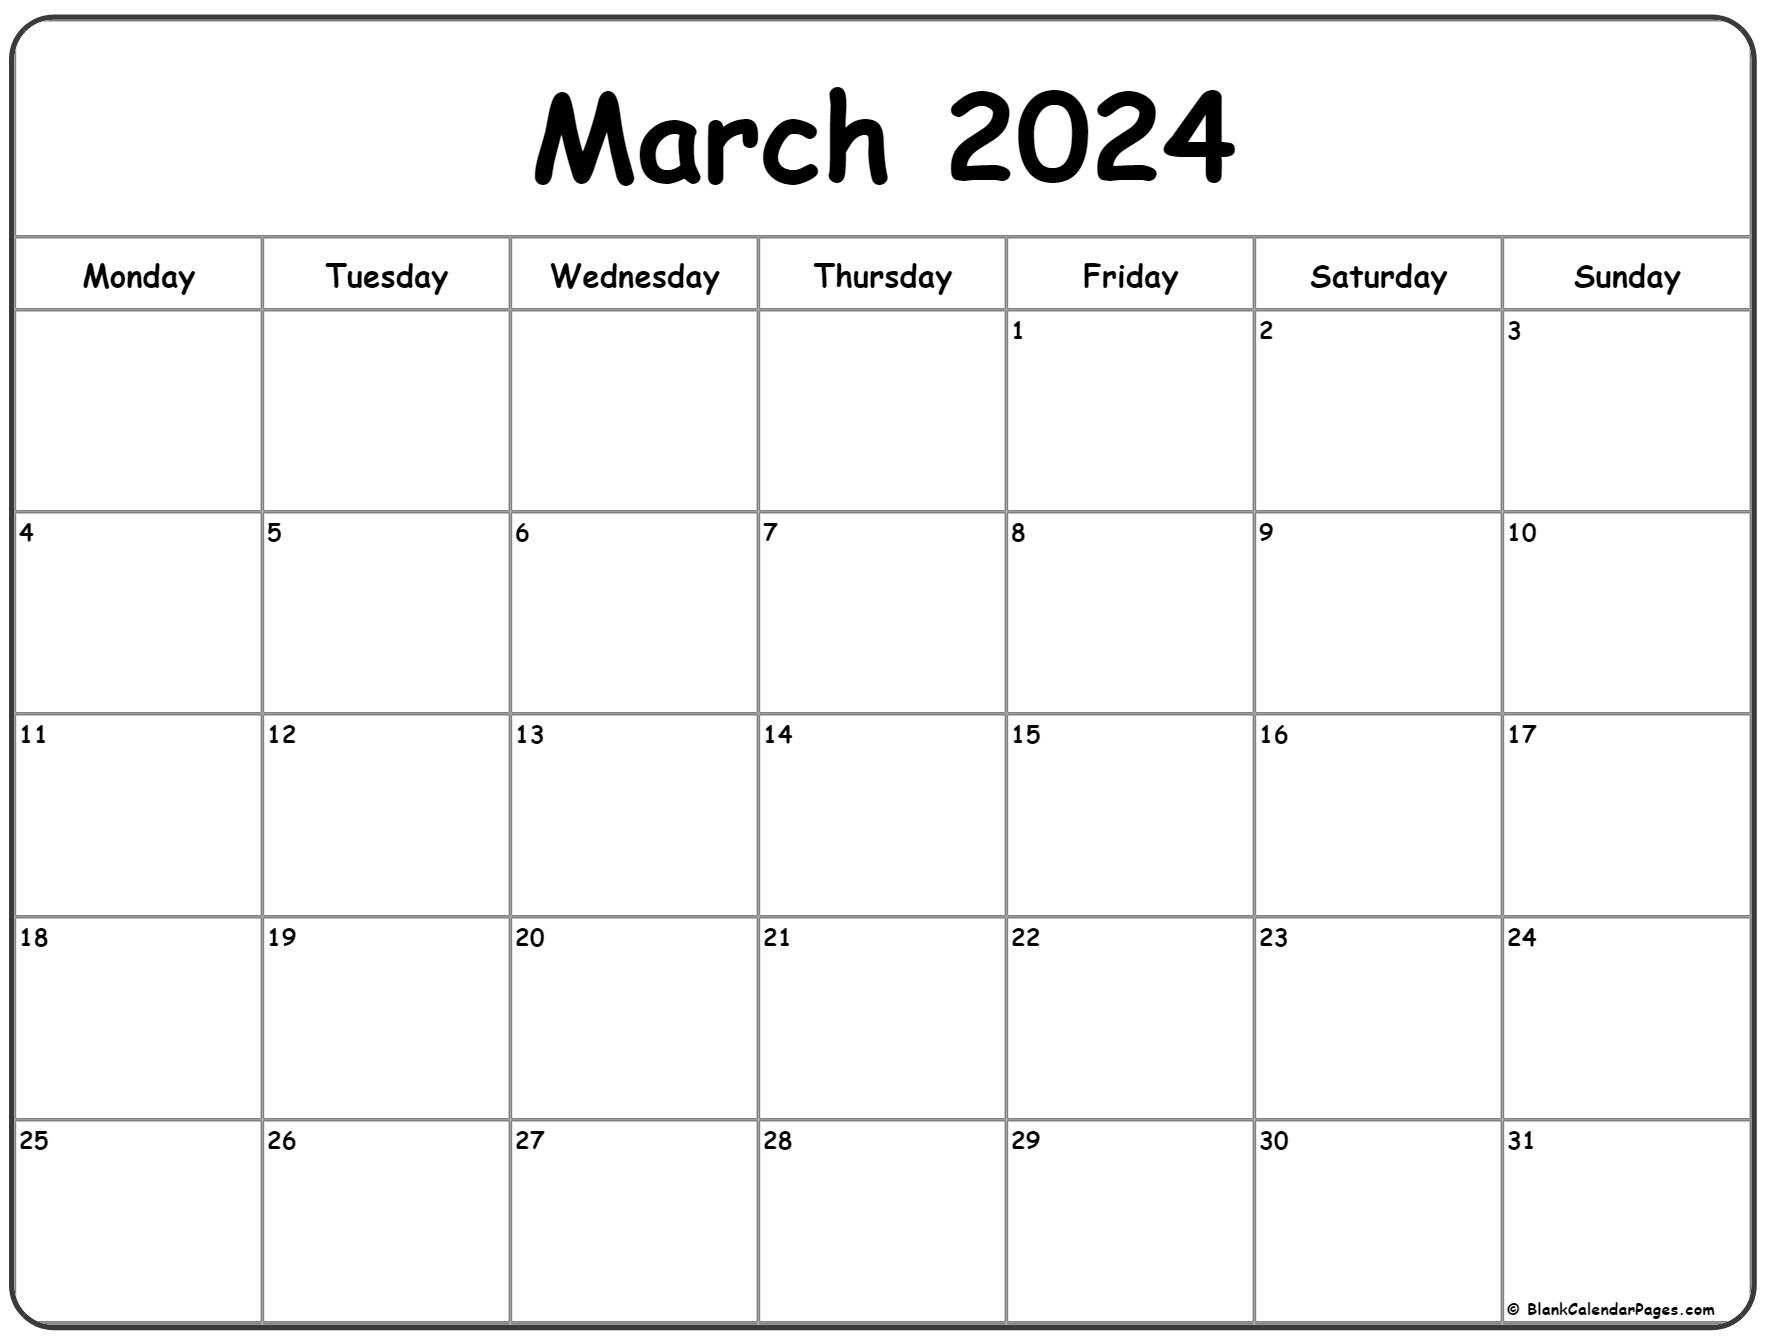 March 2022 Monday calendar. Monday to Sunday